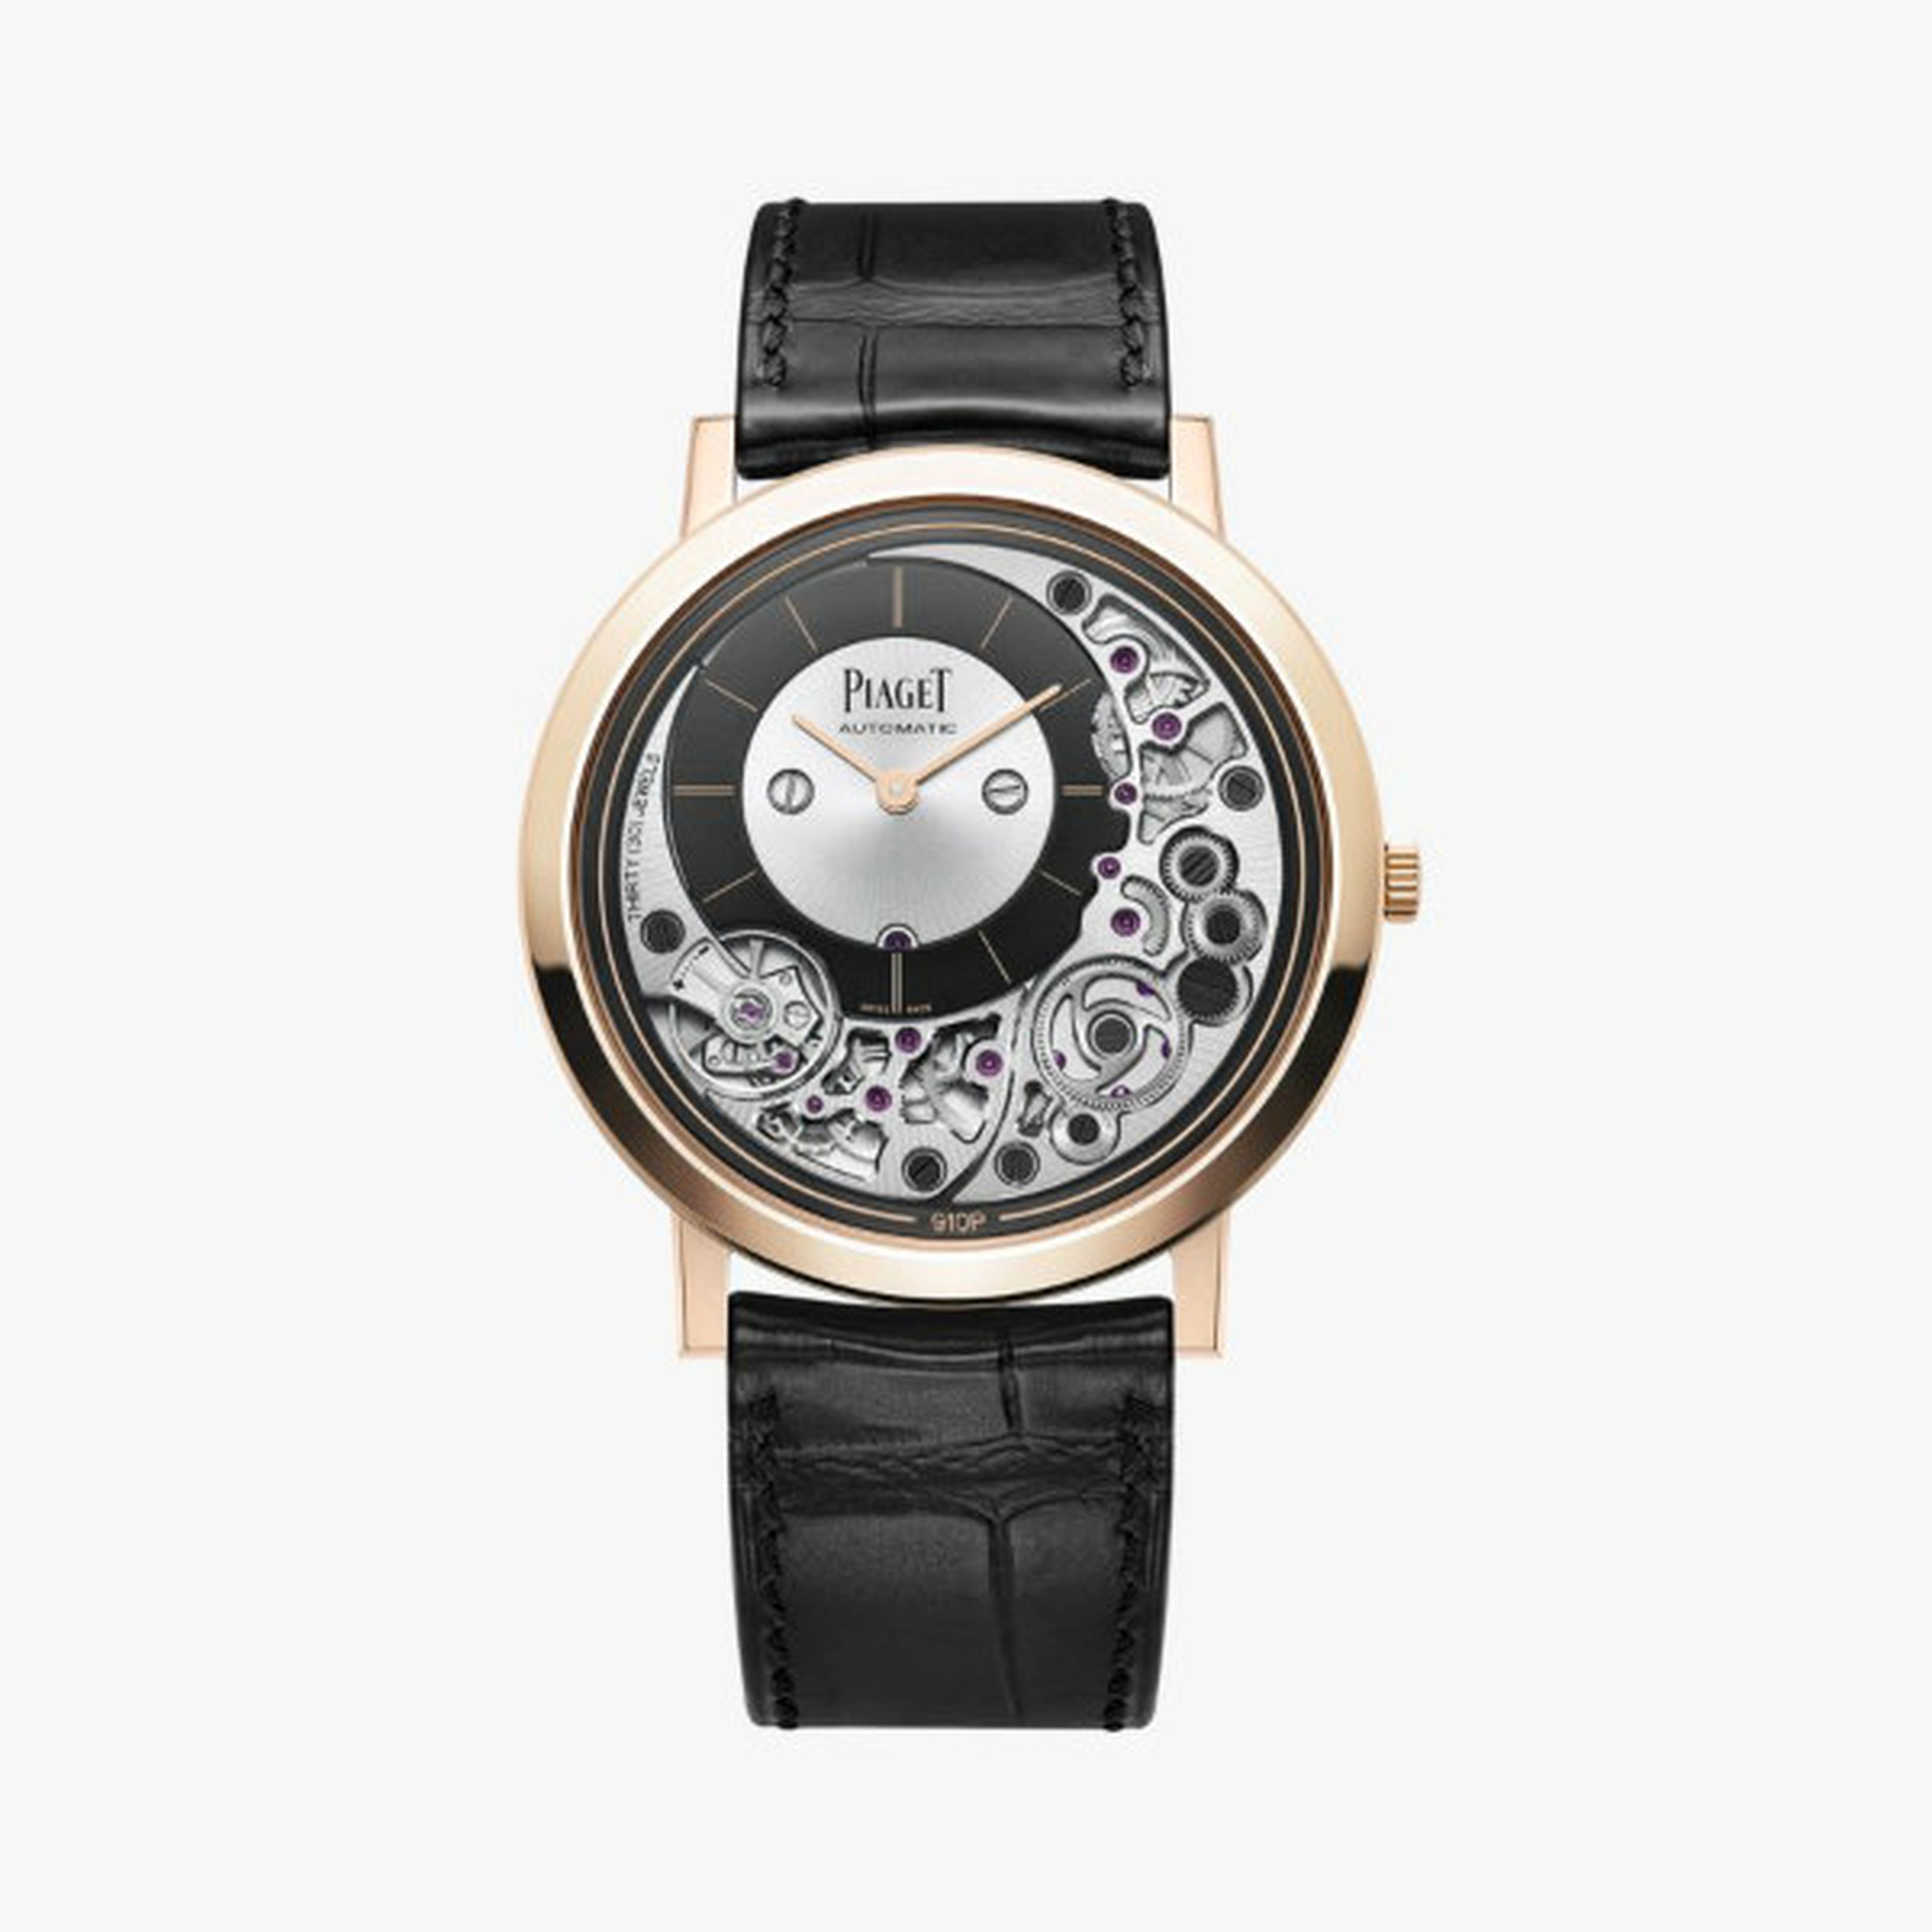 Un reloj automático Altiplano, de Piaget